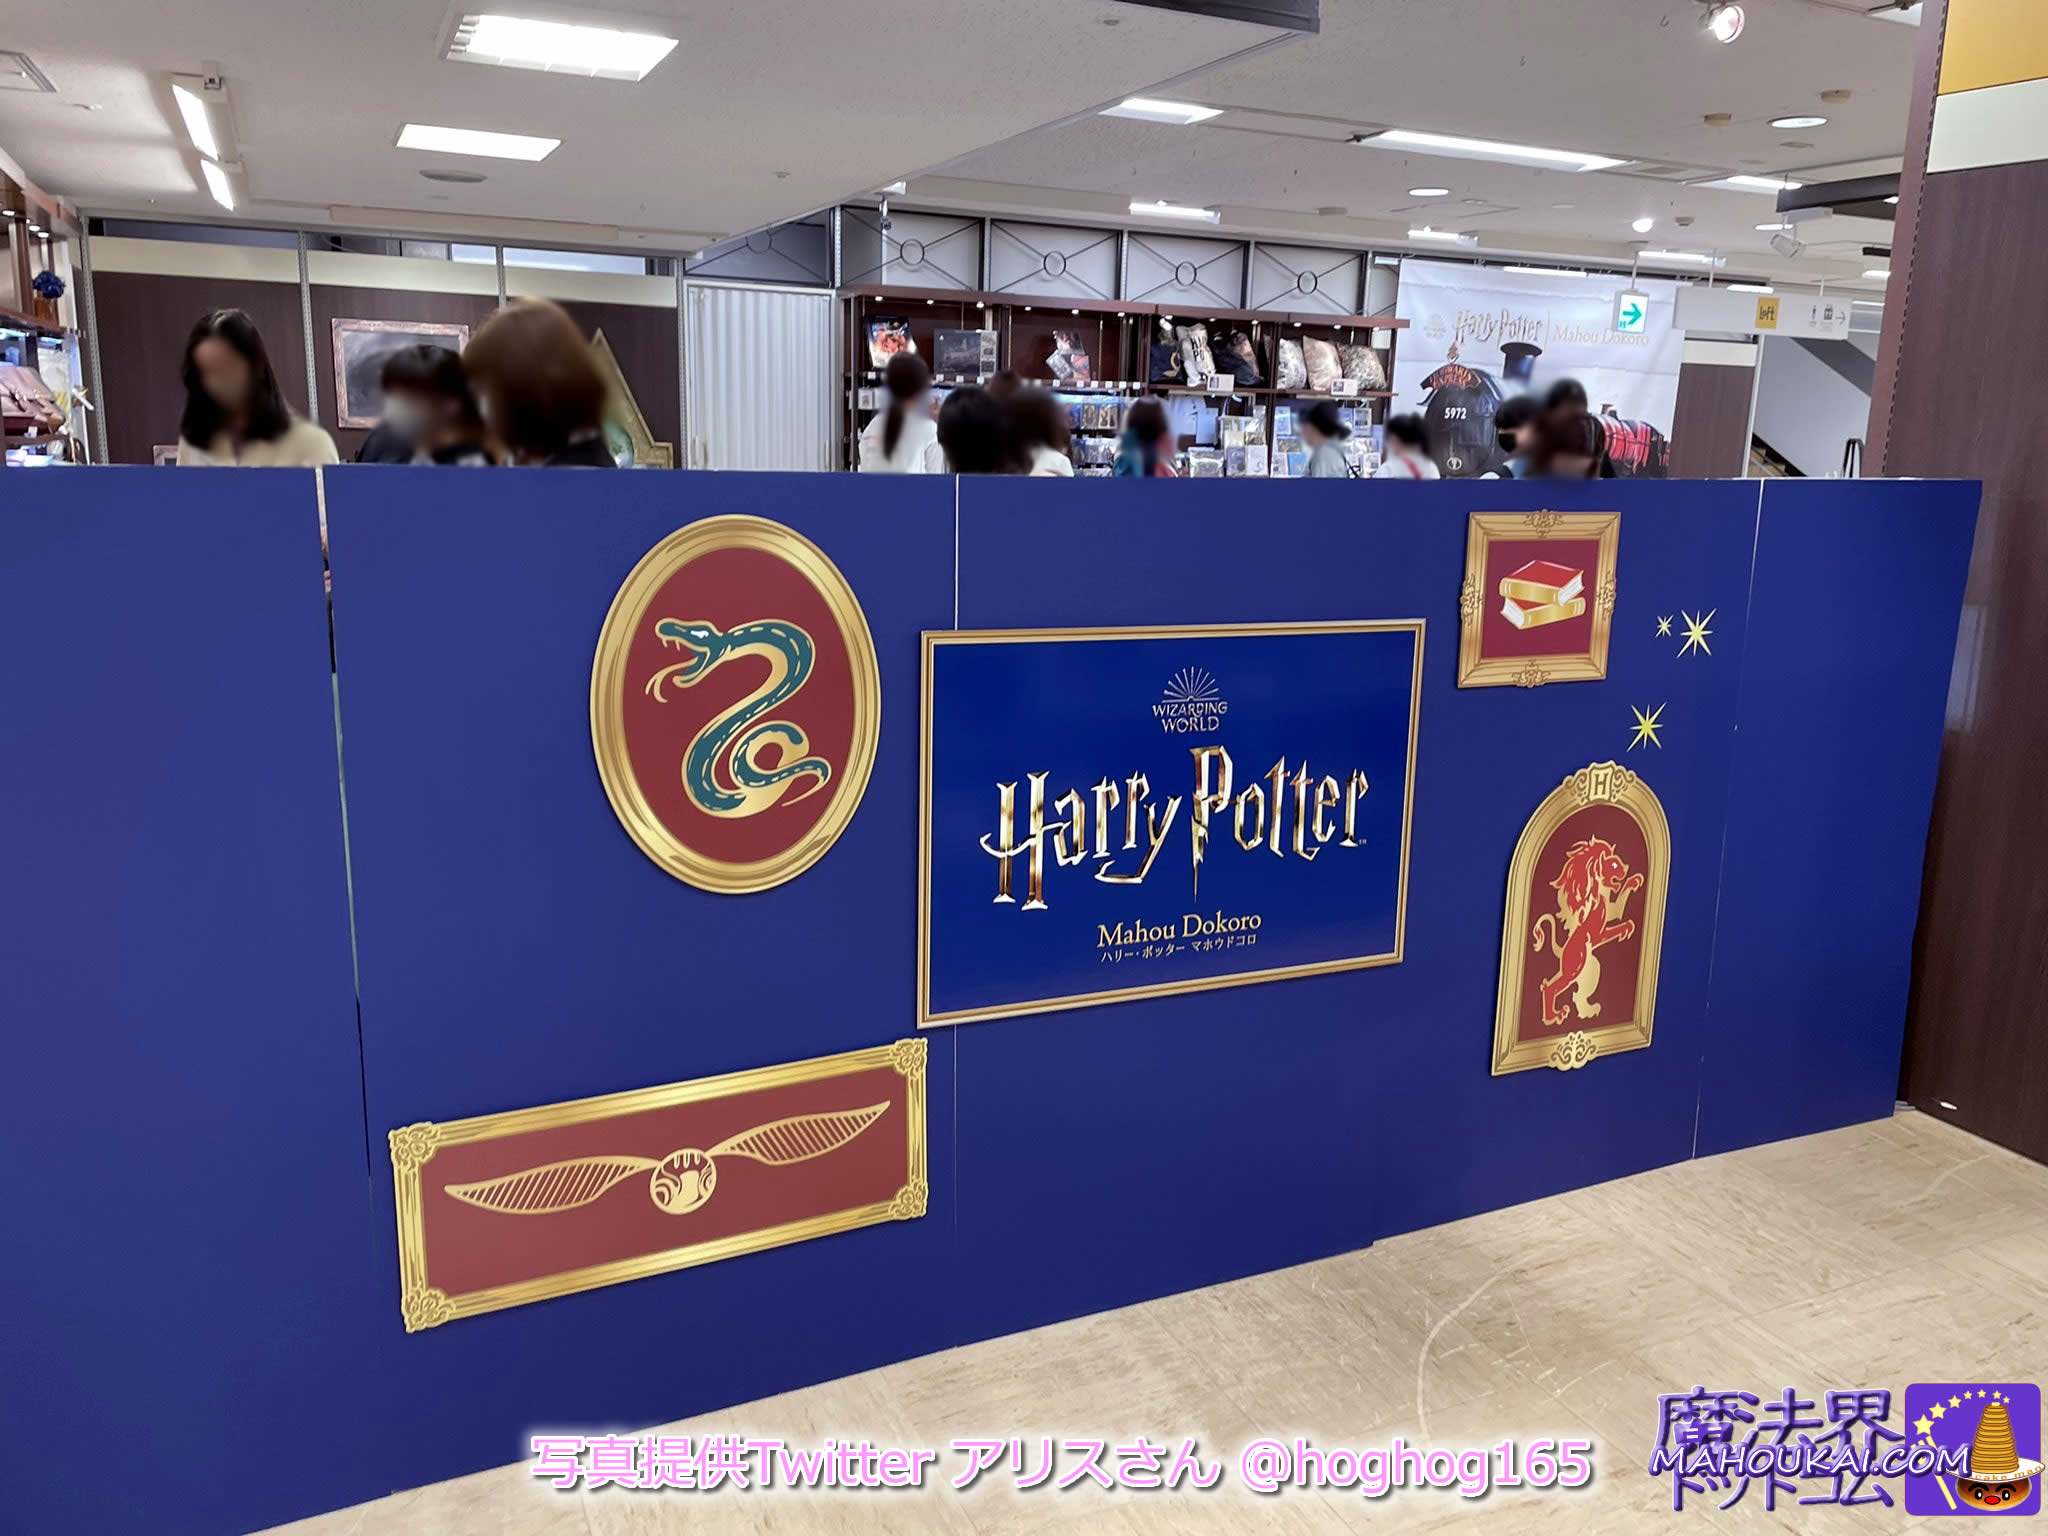 [Field report] Harry Potter Mahoudokoro Ikebukuro Loft, shooting Aris @hoghog165x.